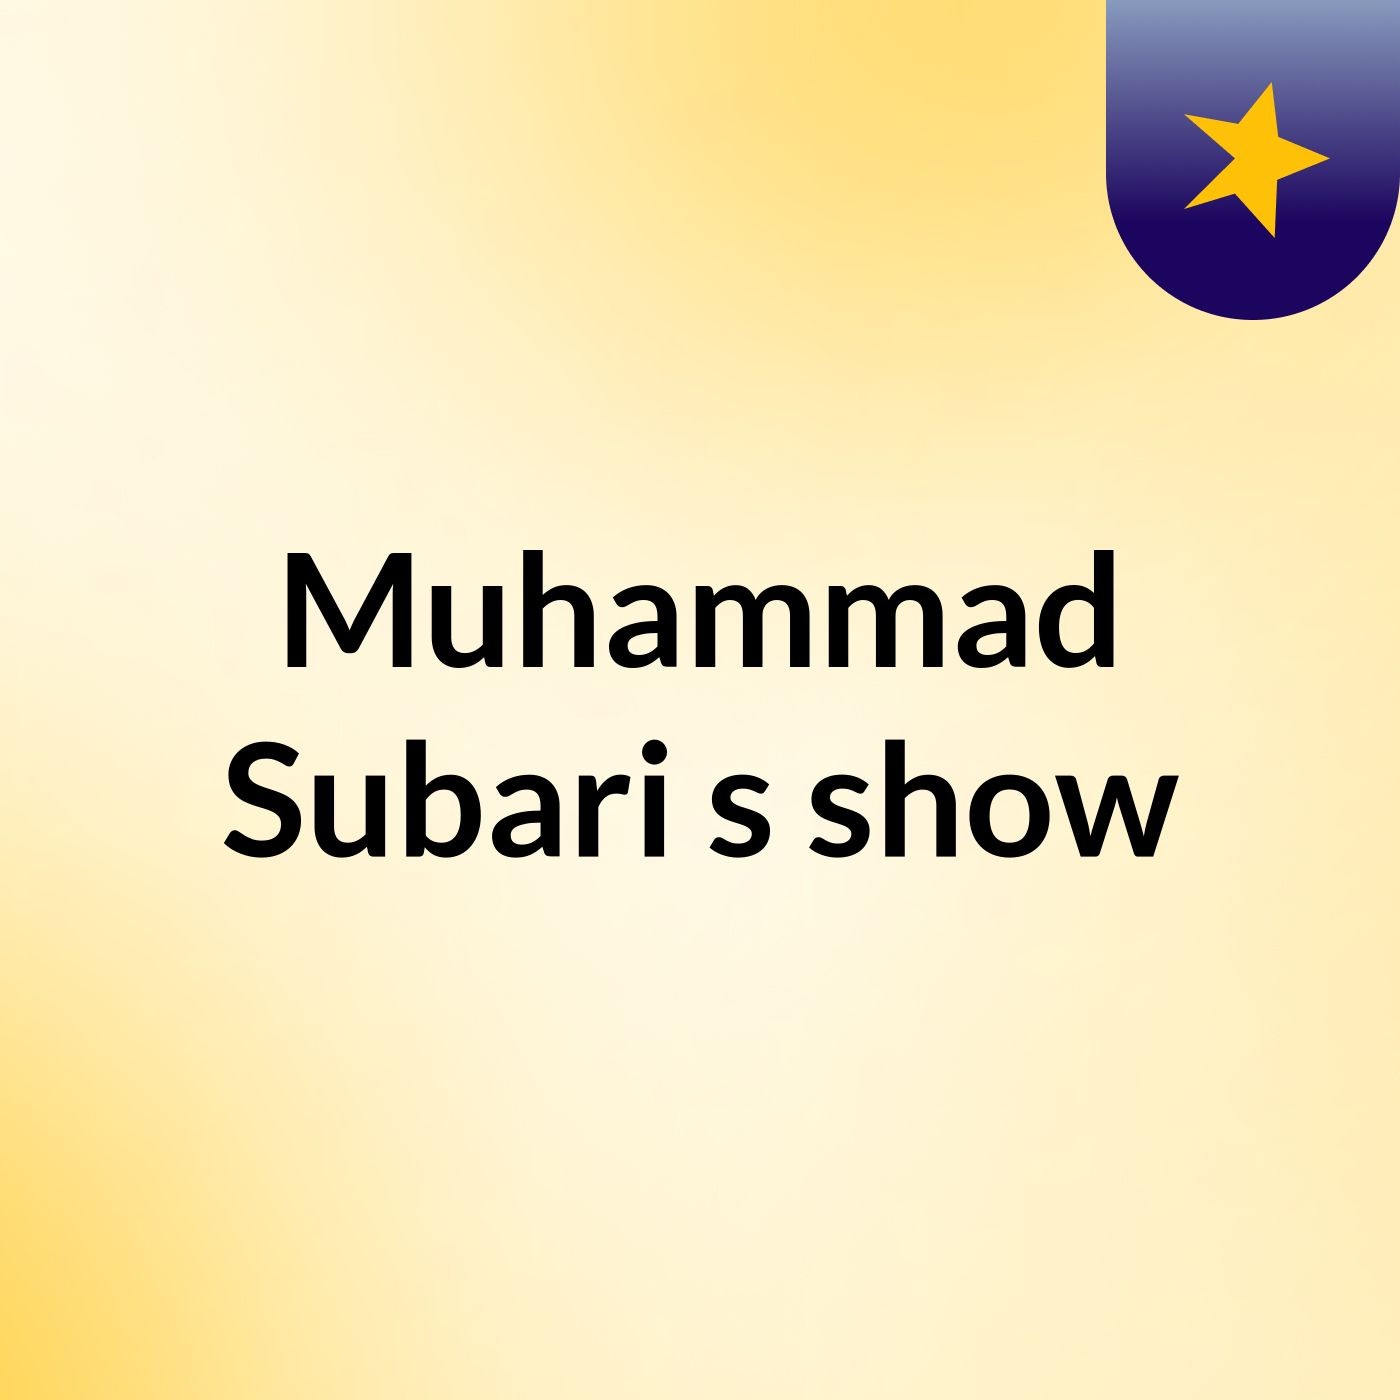 Muhammad Subari's show